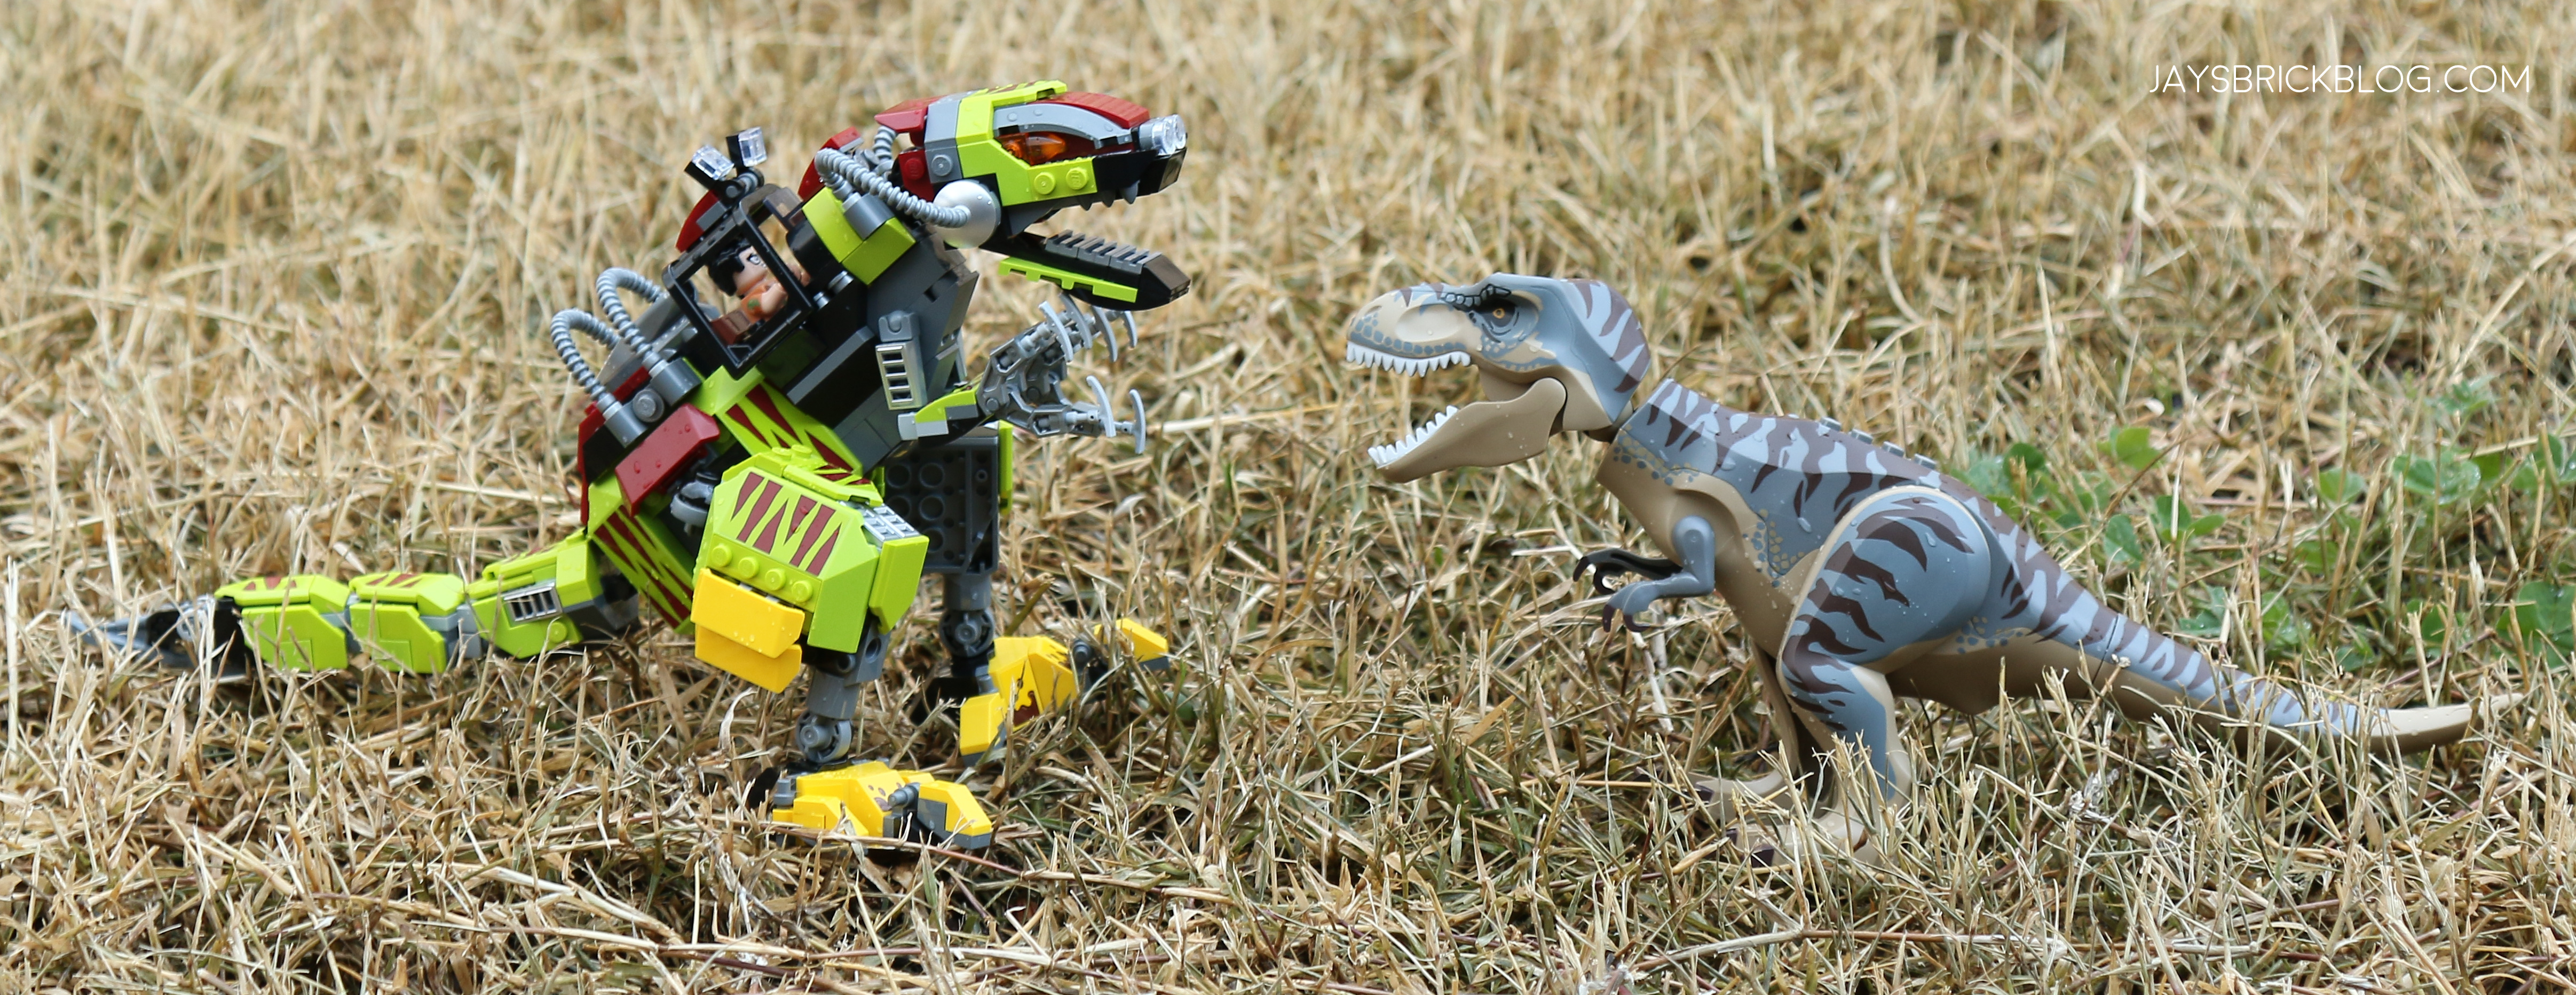 Review: LEGO 75938 T.rex vs Dino Mech Battle - Jay's Brick Blog